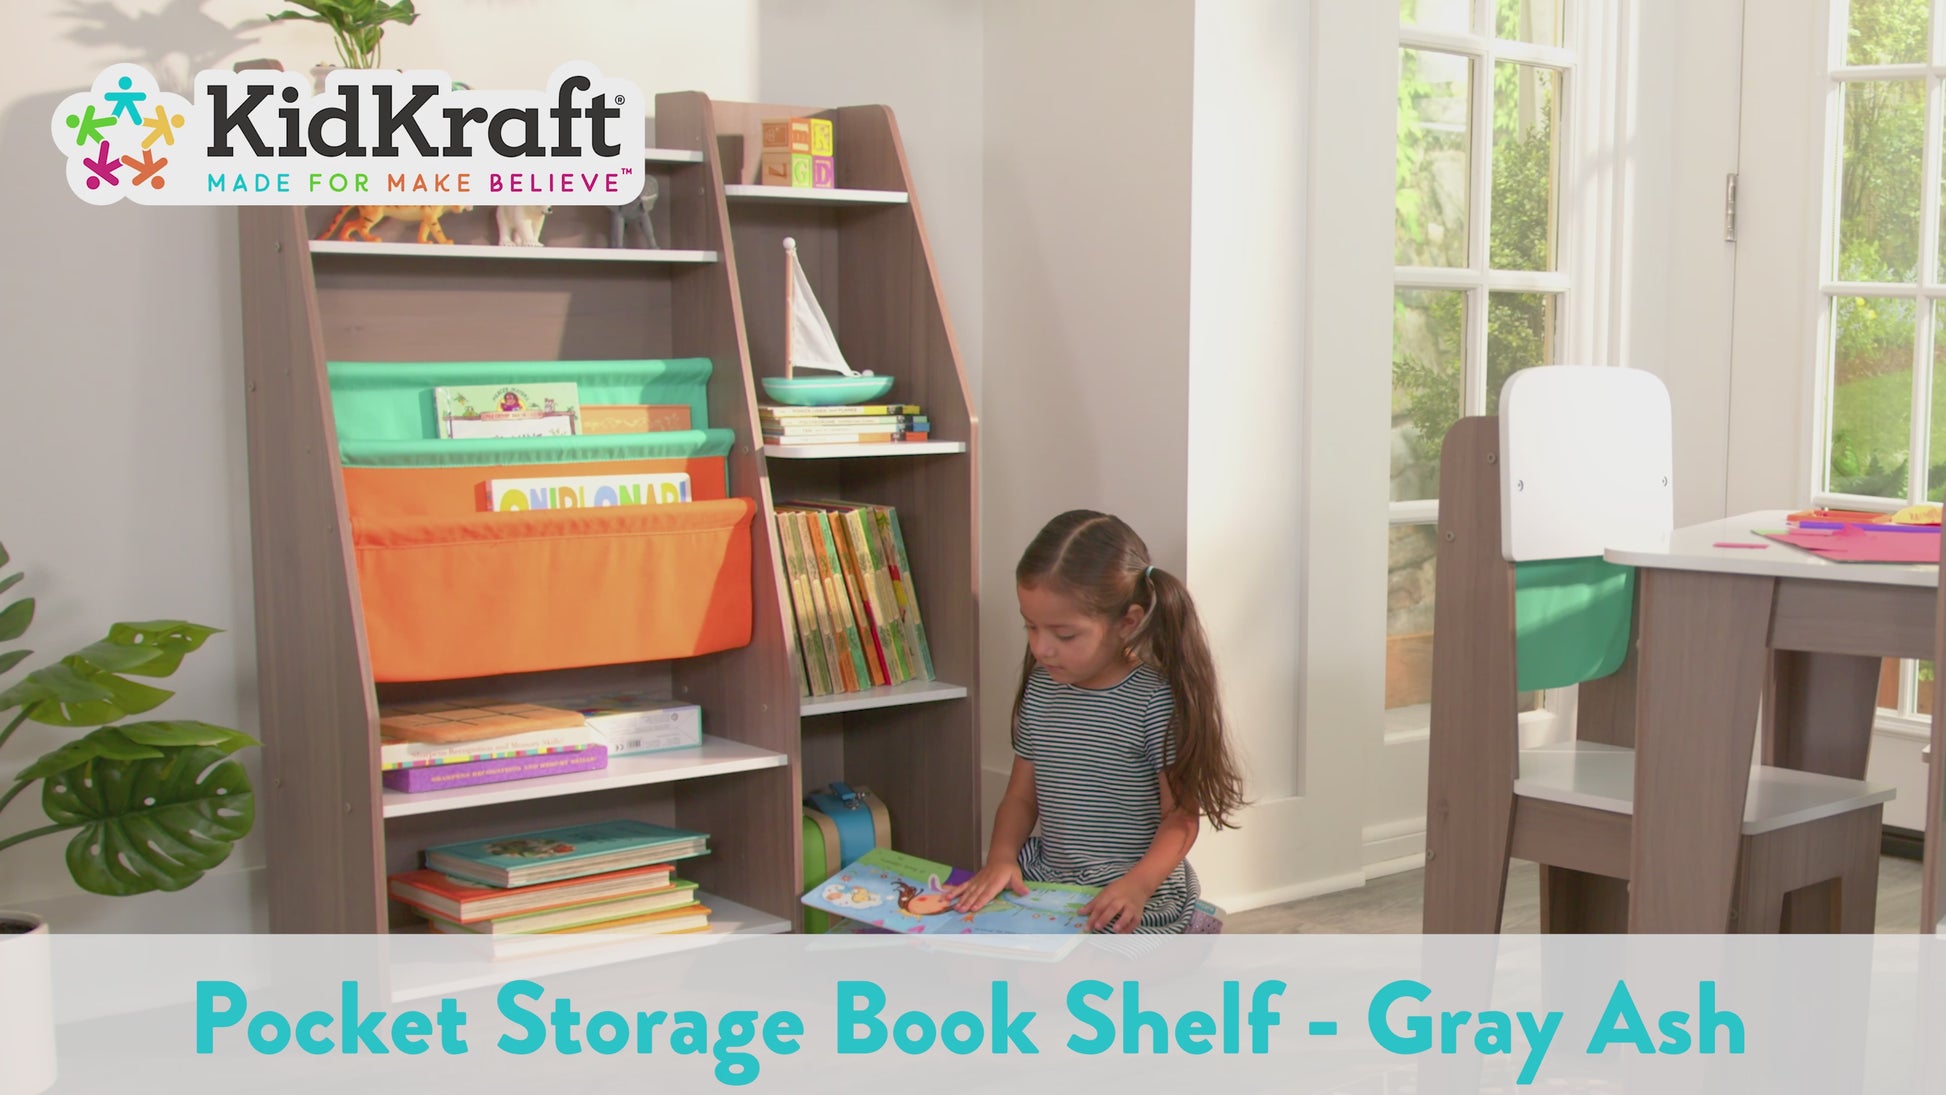 video of girl reading in front of KidKraft Pocket Storage Bookshelf - Gray Ash